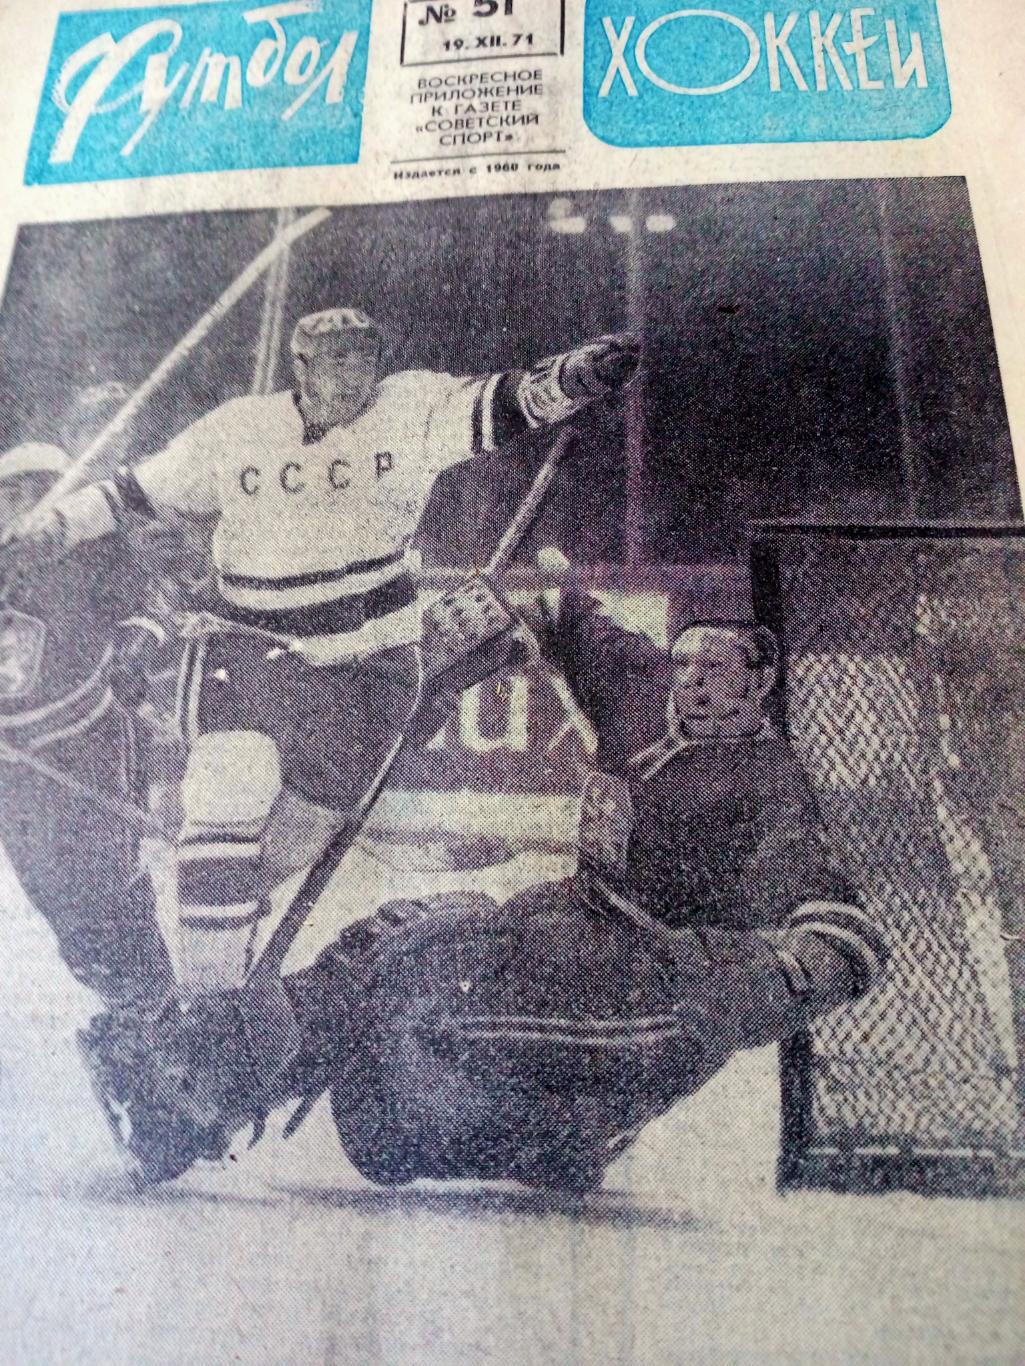 Футбол-Хоккей. 1971 год. №51